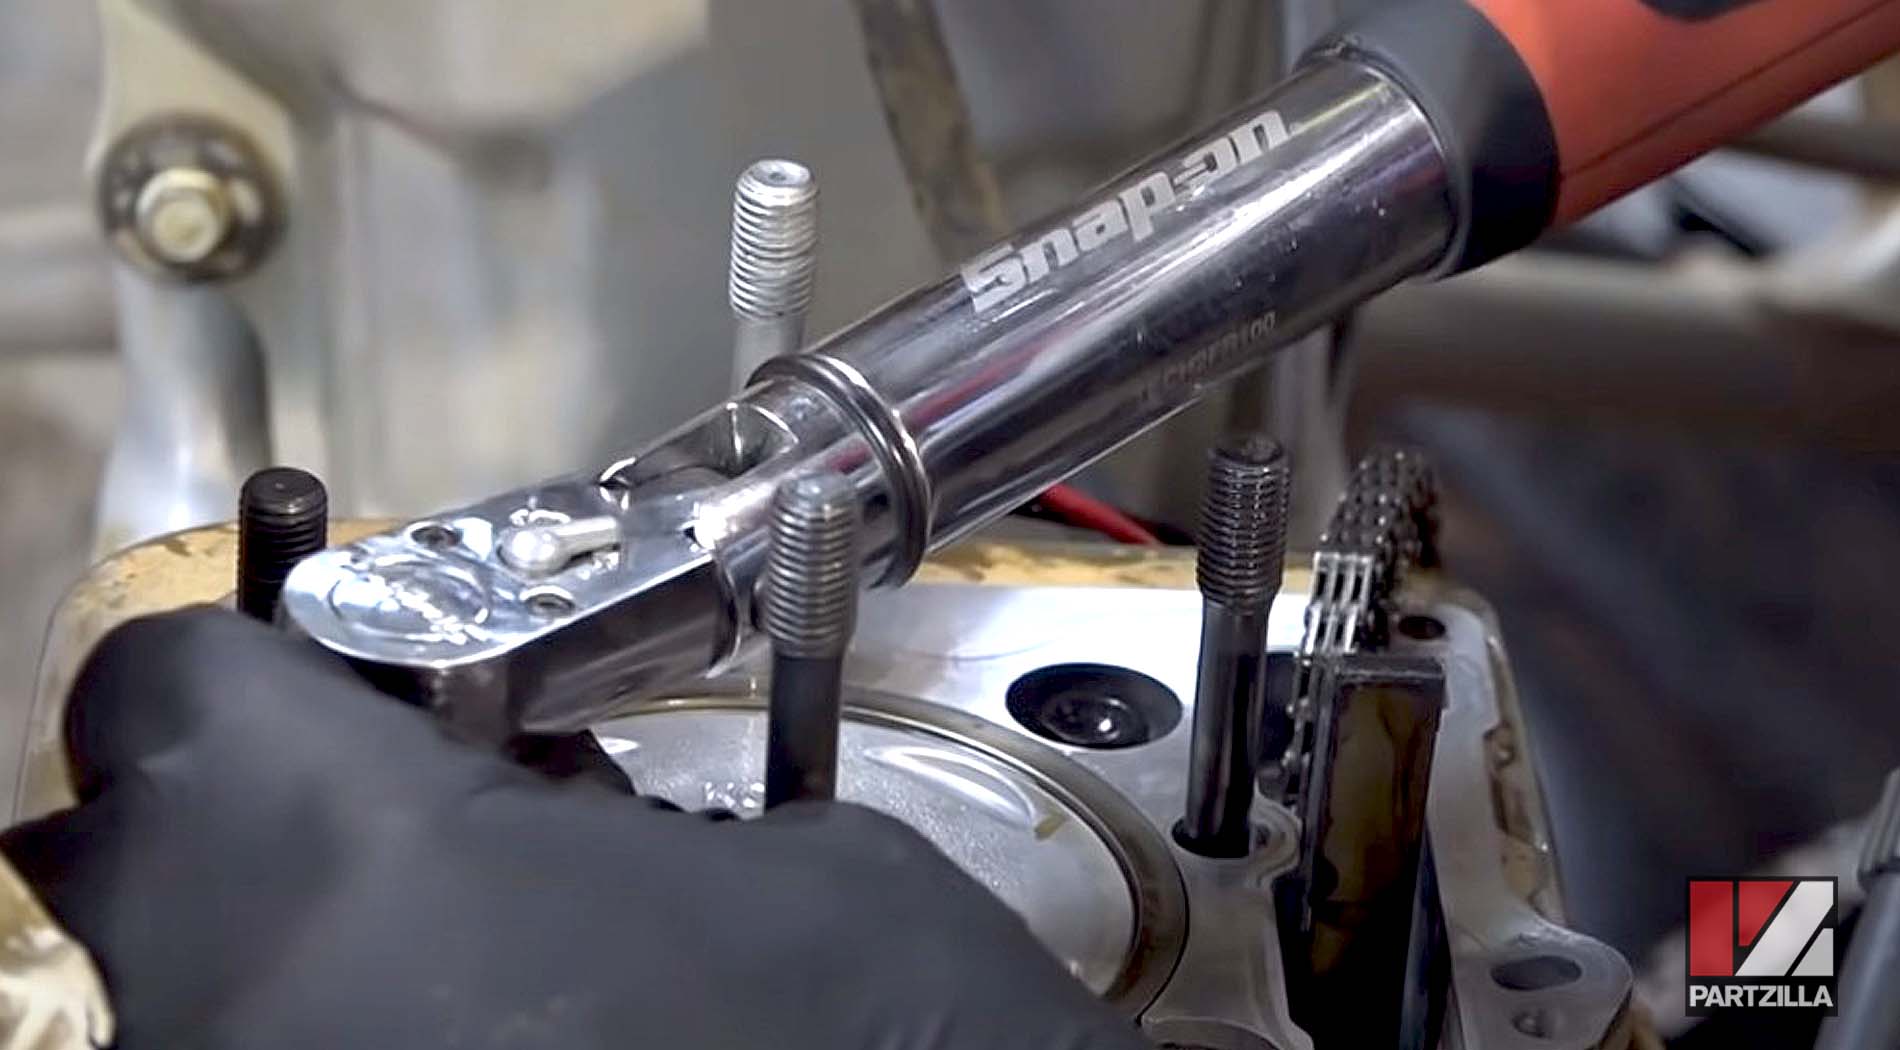 Honda TRX400 engine rebuild cylinder head installation